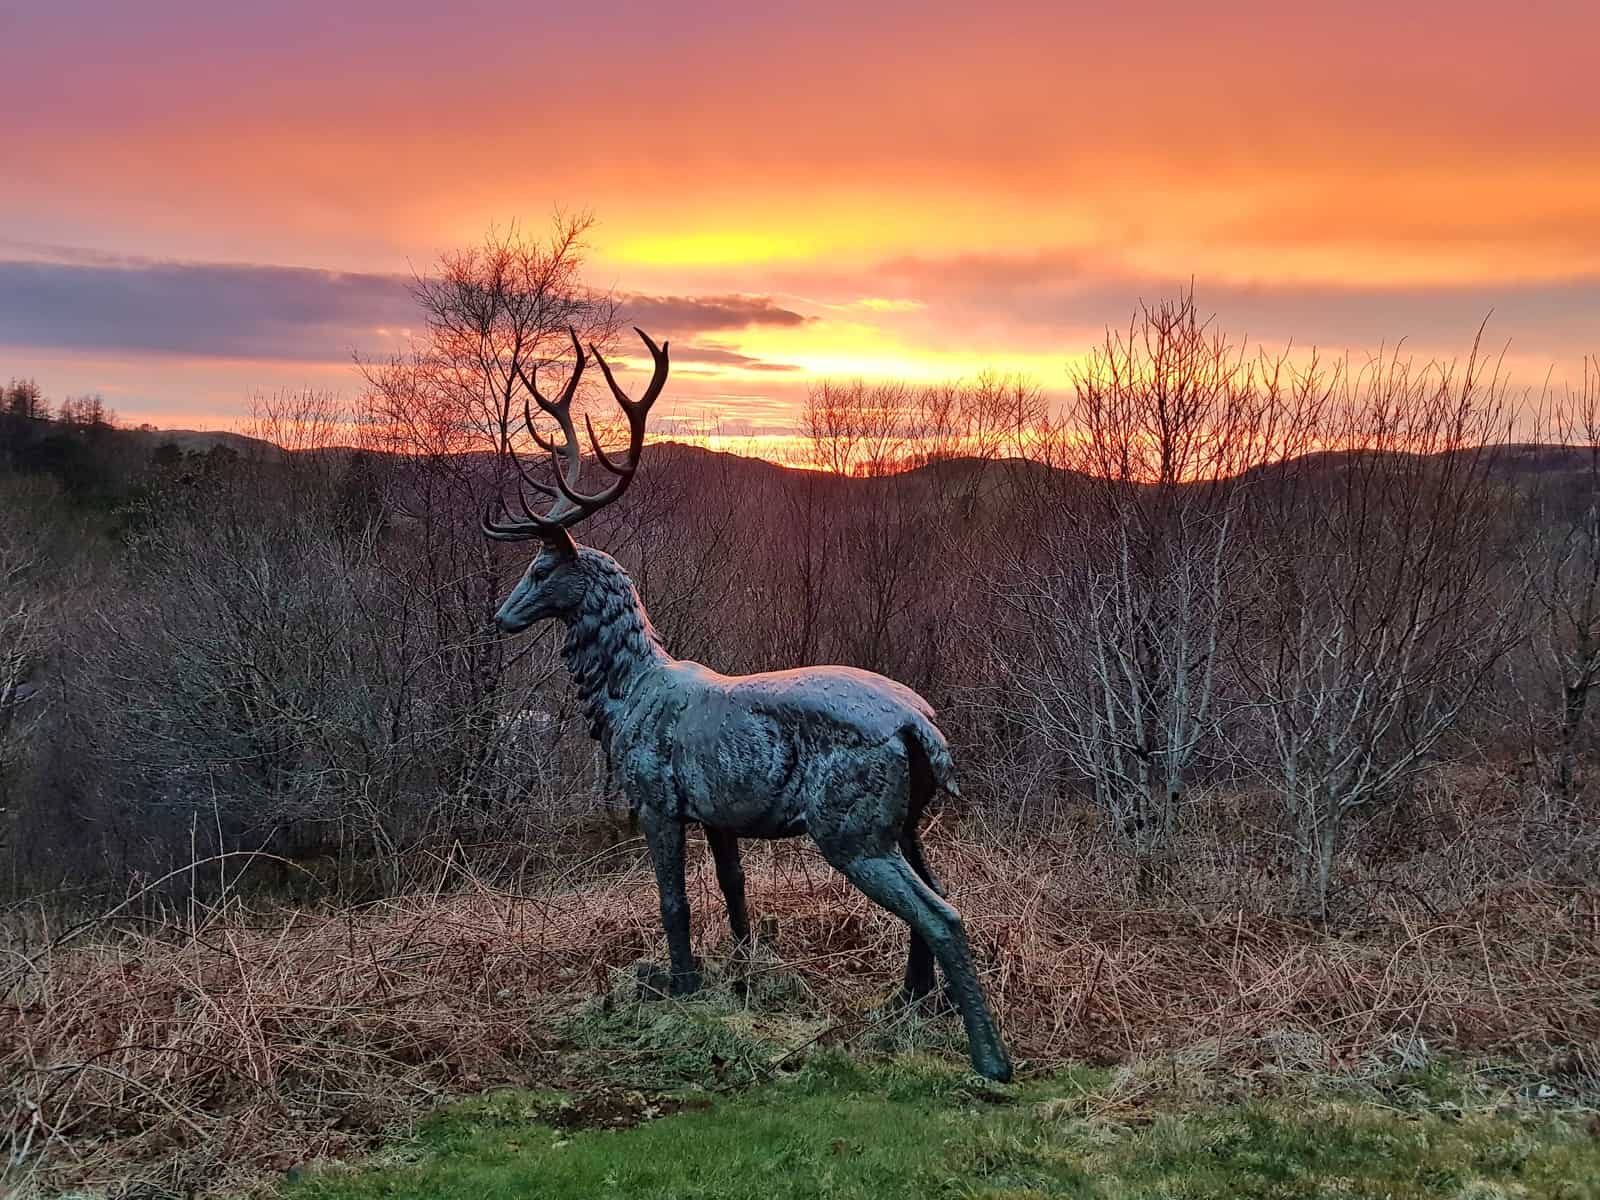 Sunset over hills behind metal deer statue taken at a campsite in Devil's Bridge, a stop on the Vale of Rheidol Railway